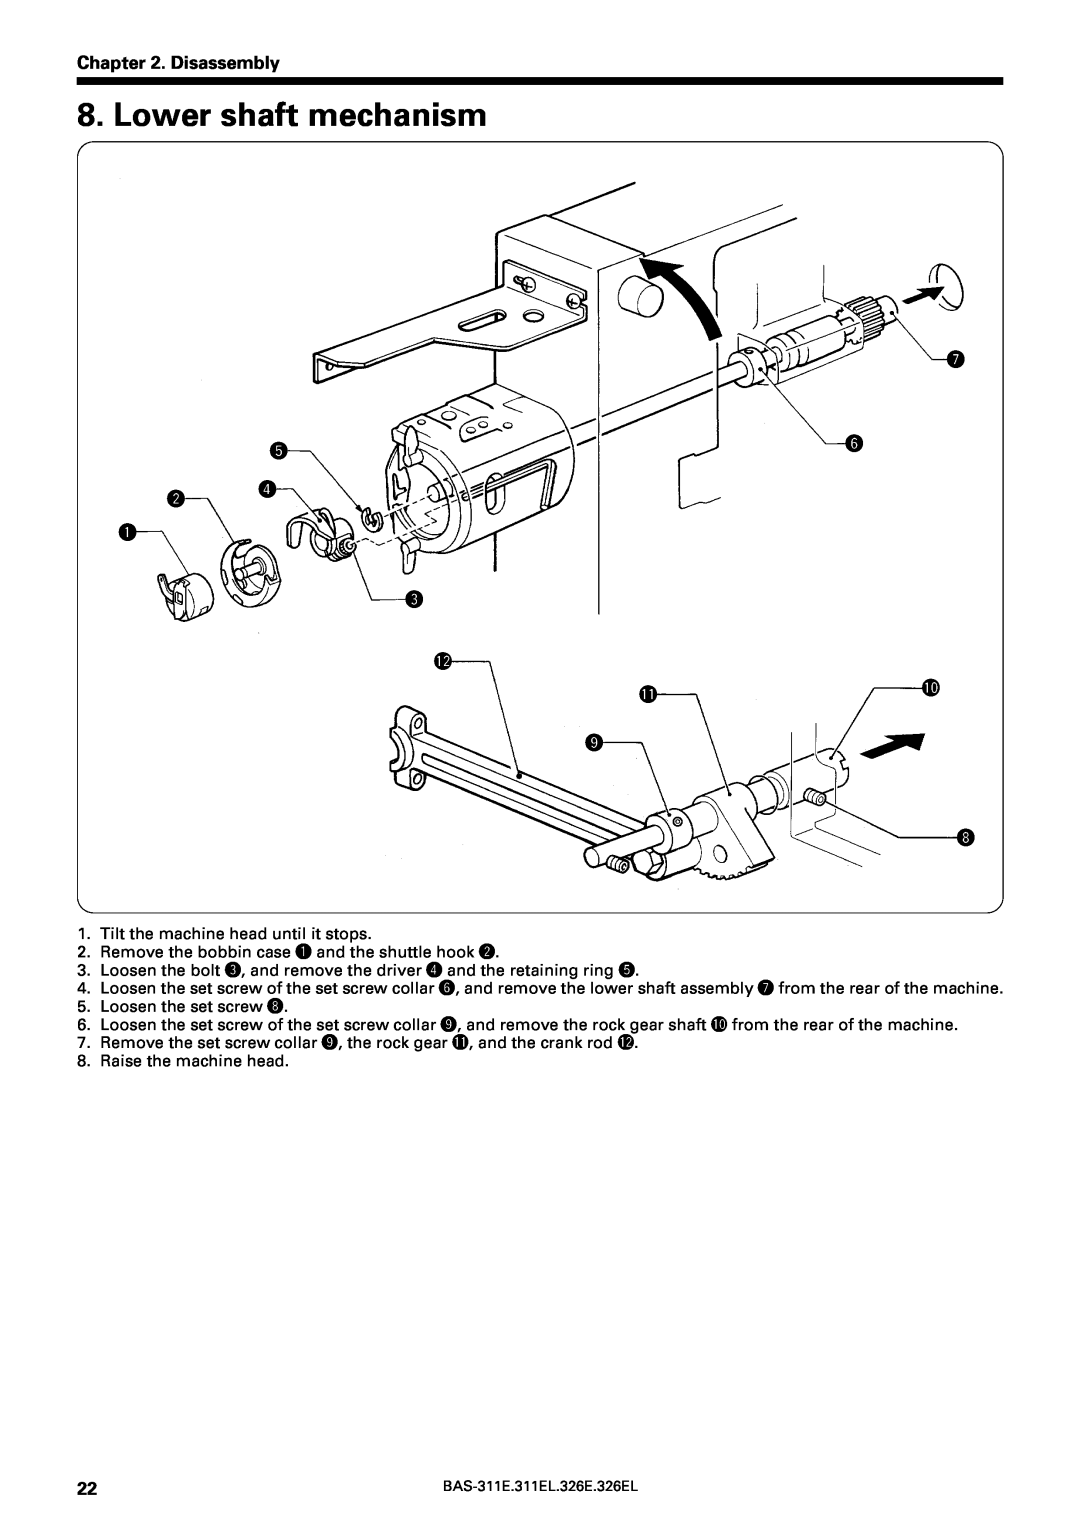 Brother BAS-311E service manual Lower shaft mechanism, Disassembly, w r q e, 1!0 o i 